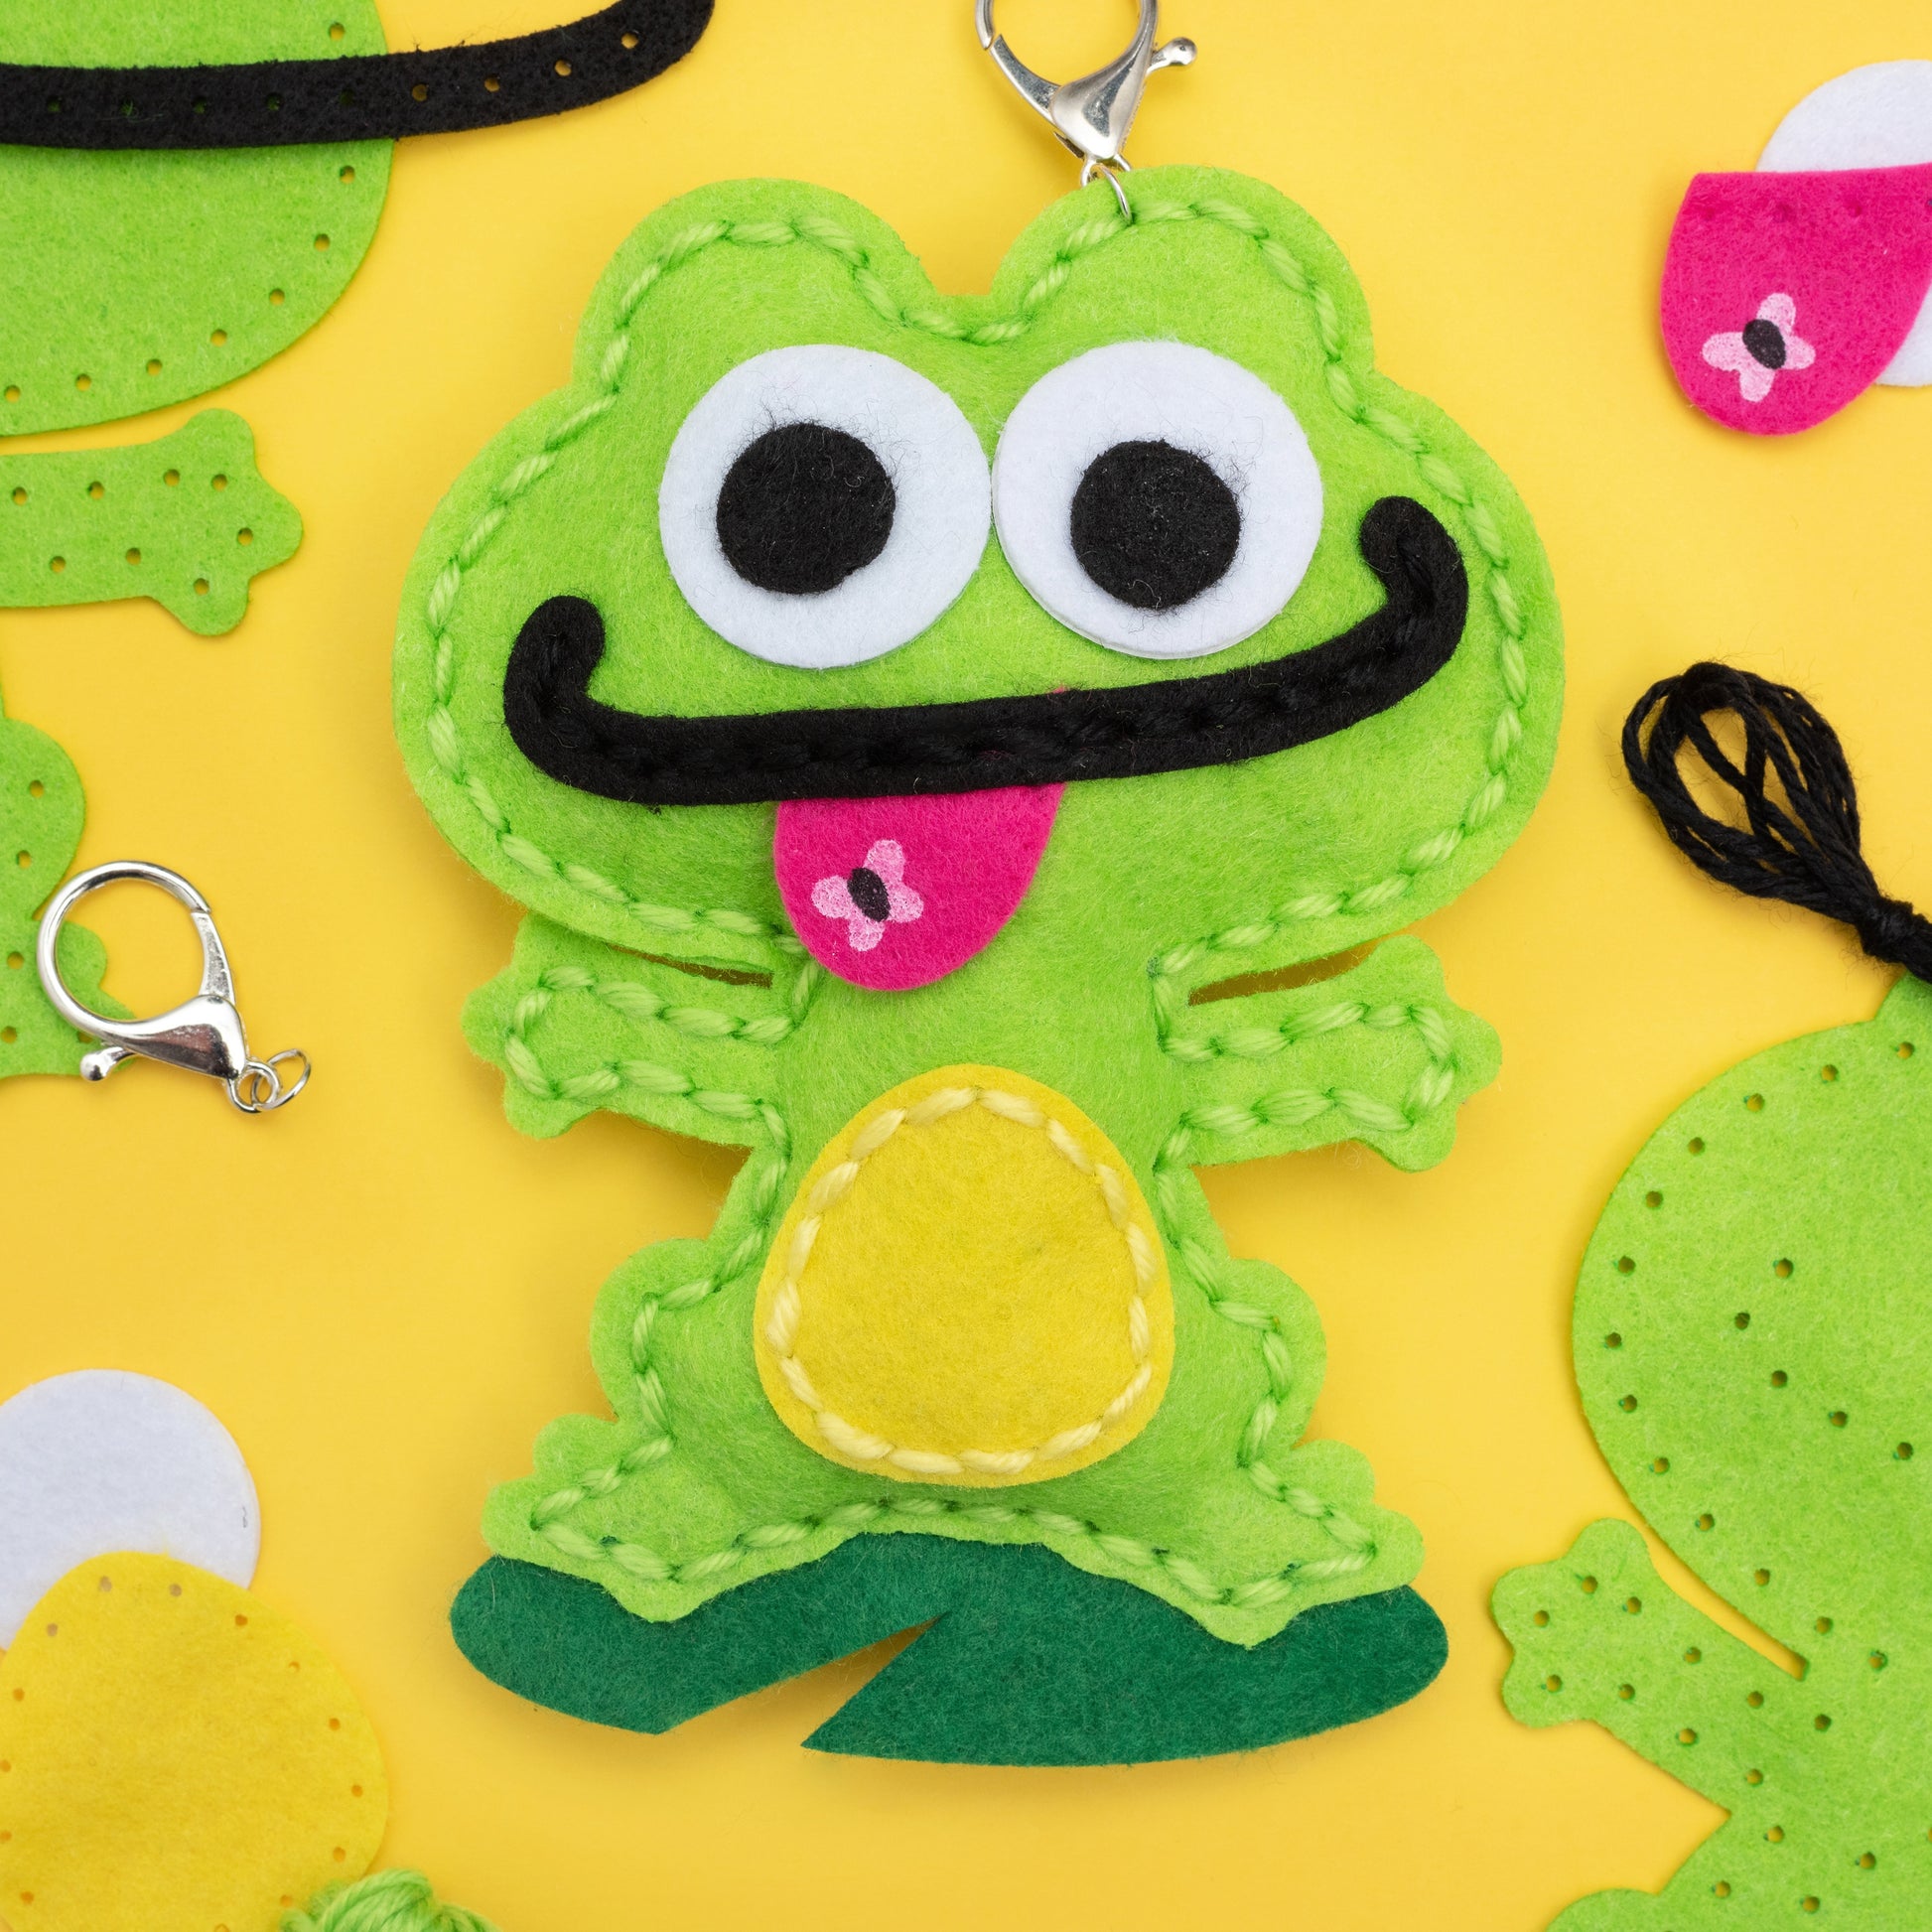 Colorbok Kit Sew Cute Keychain Felt Frog